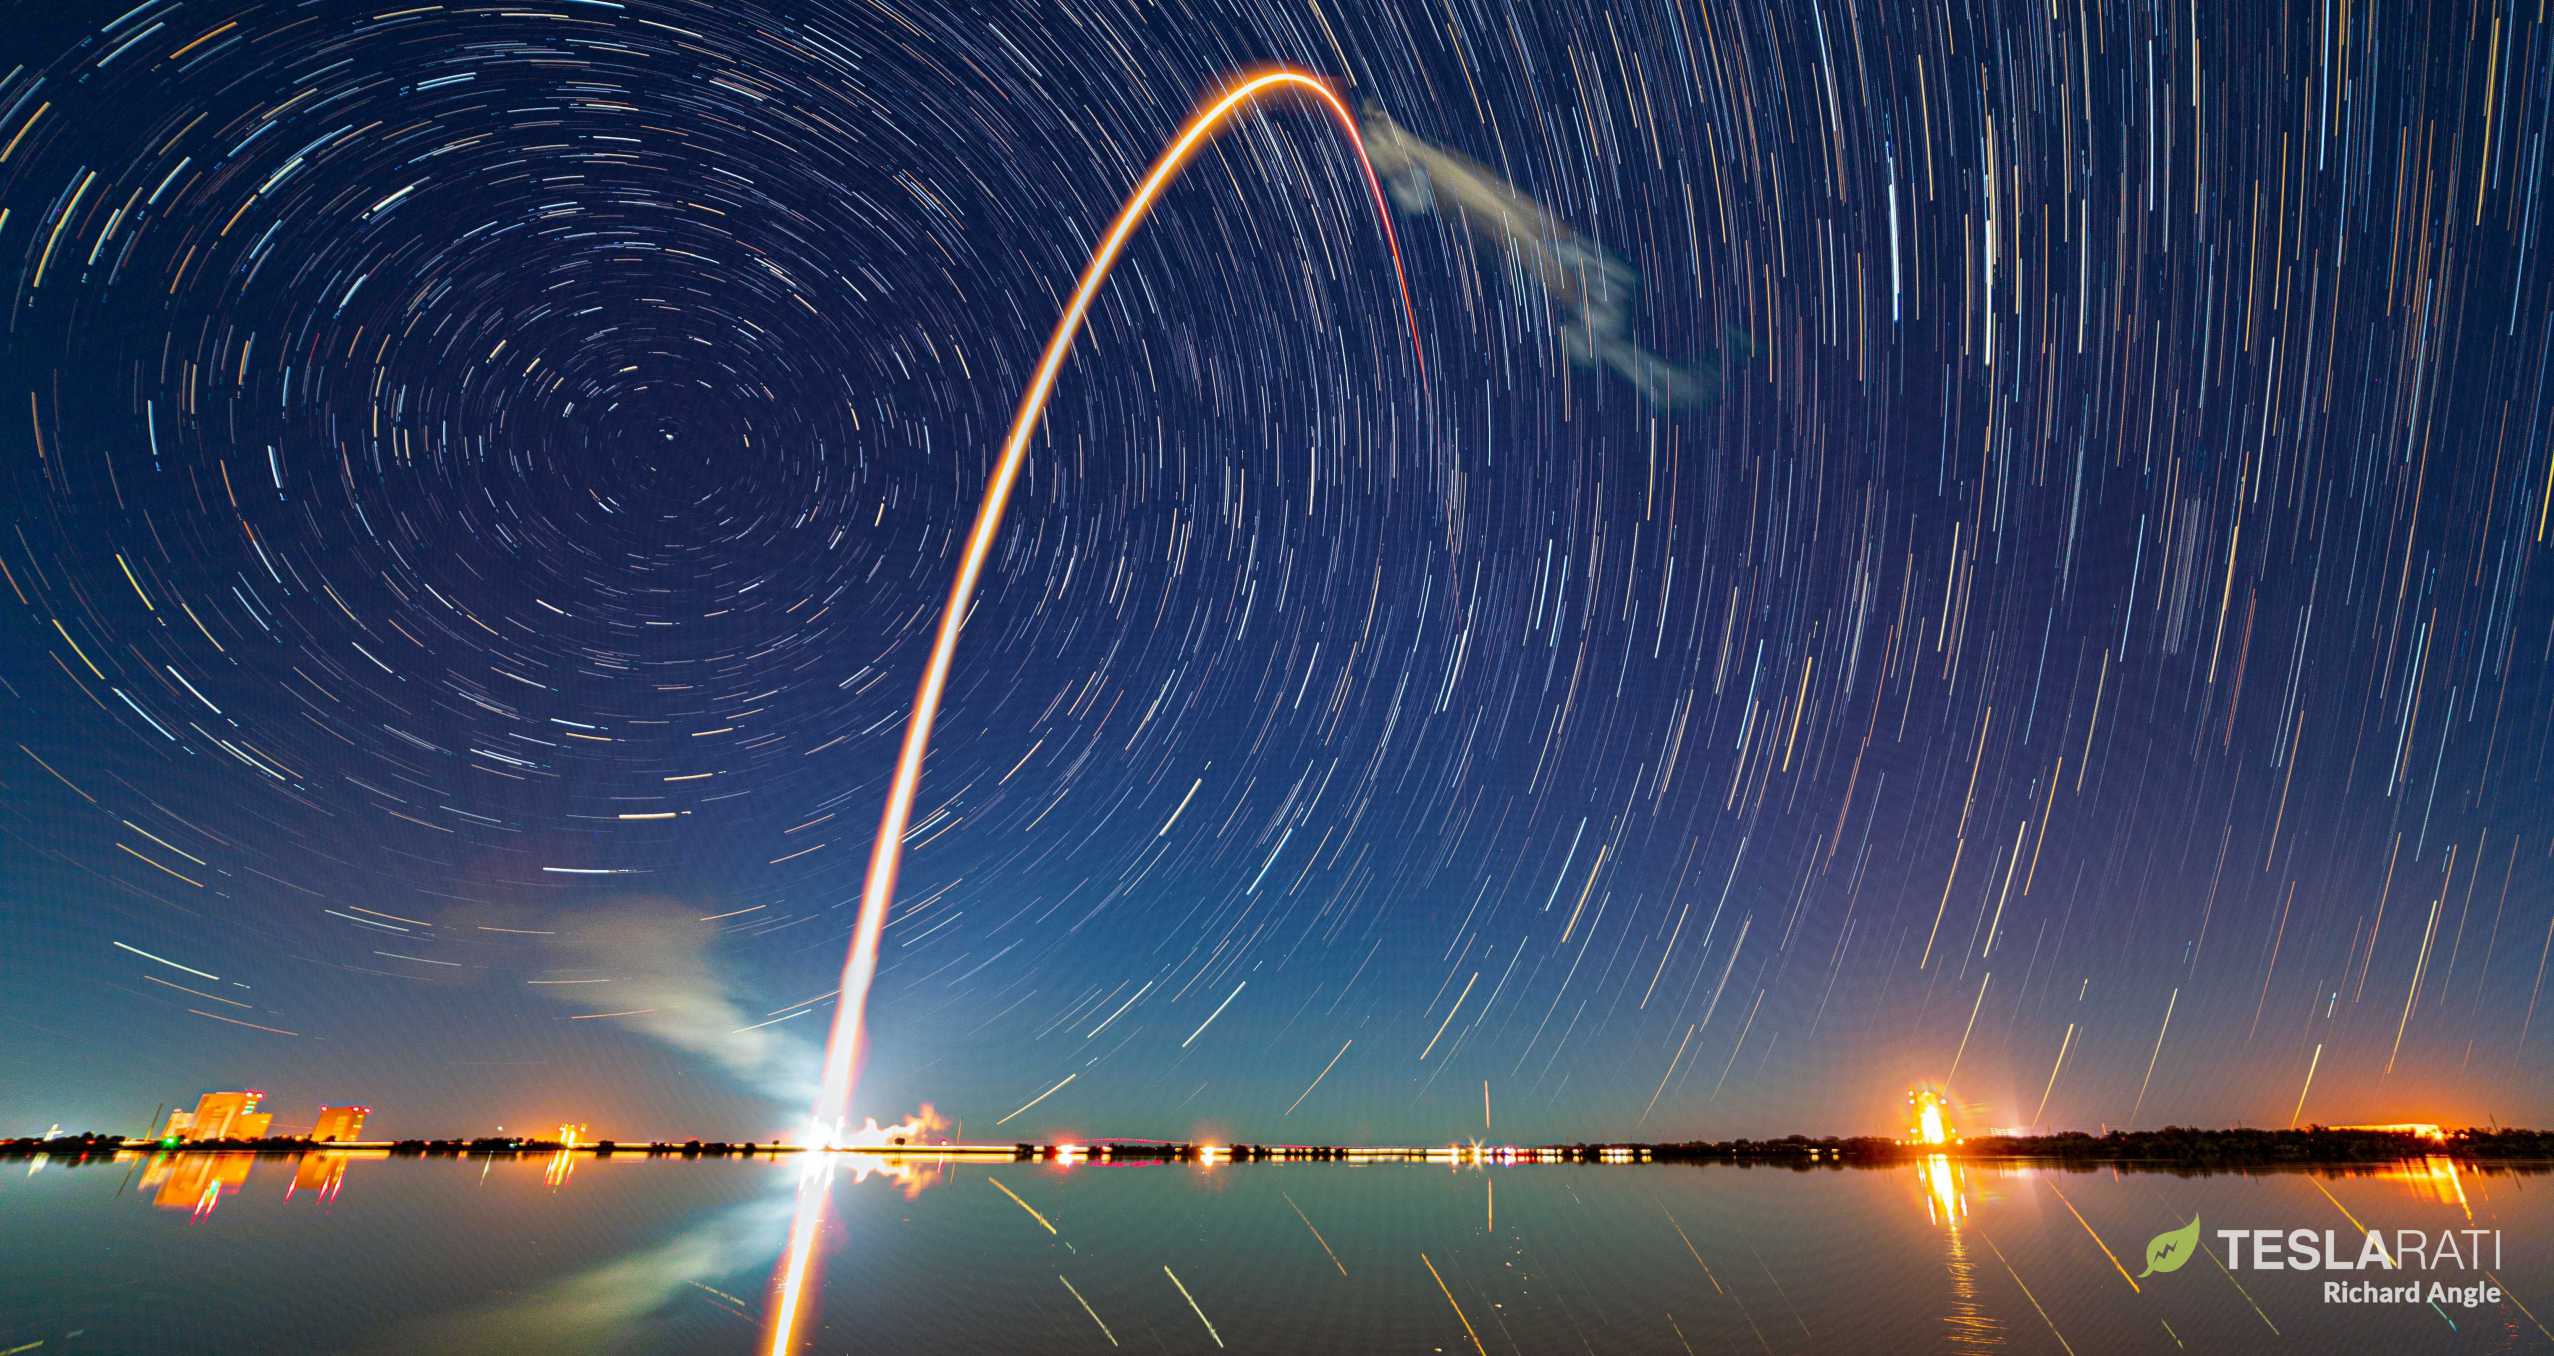 Starlink-2 Falcon 9 B1049 010620 (SpaceX) launch streak 1 startrail crop (c)